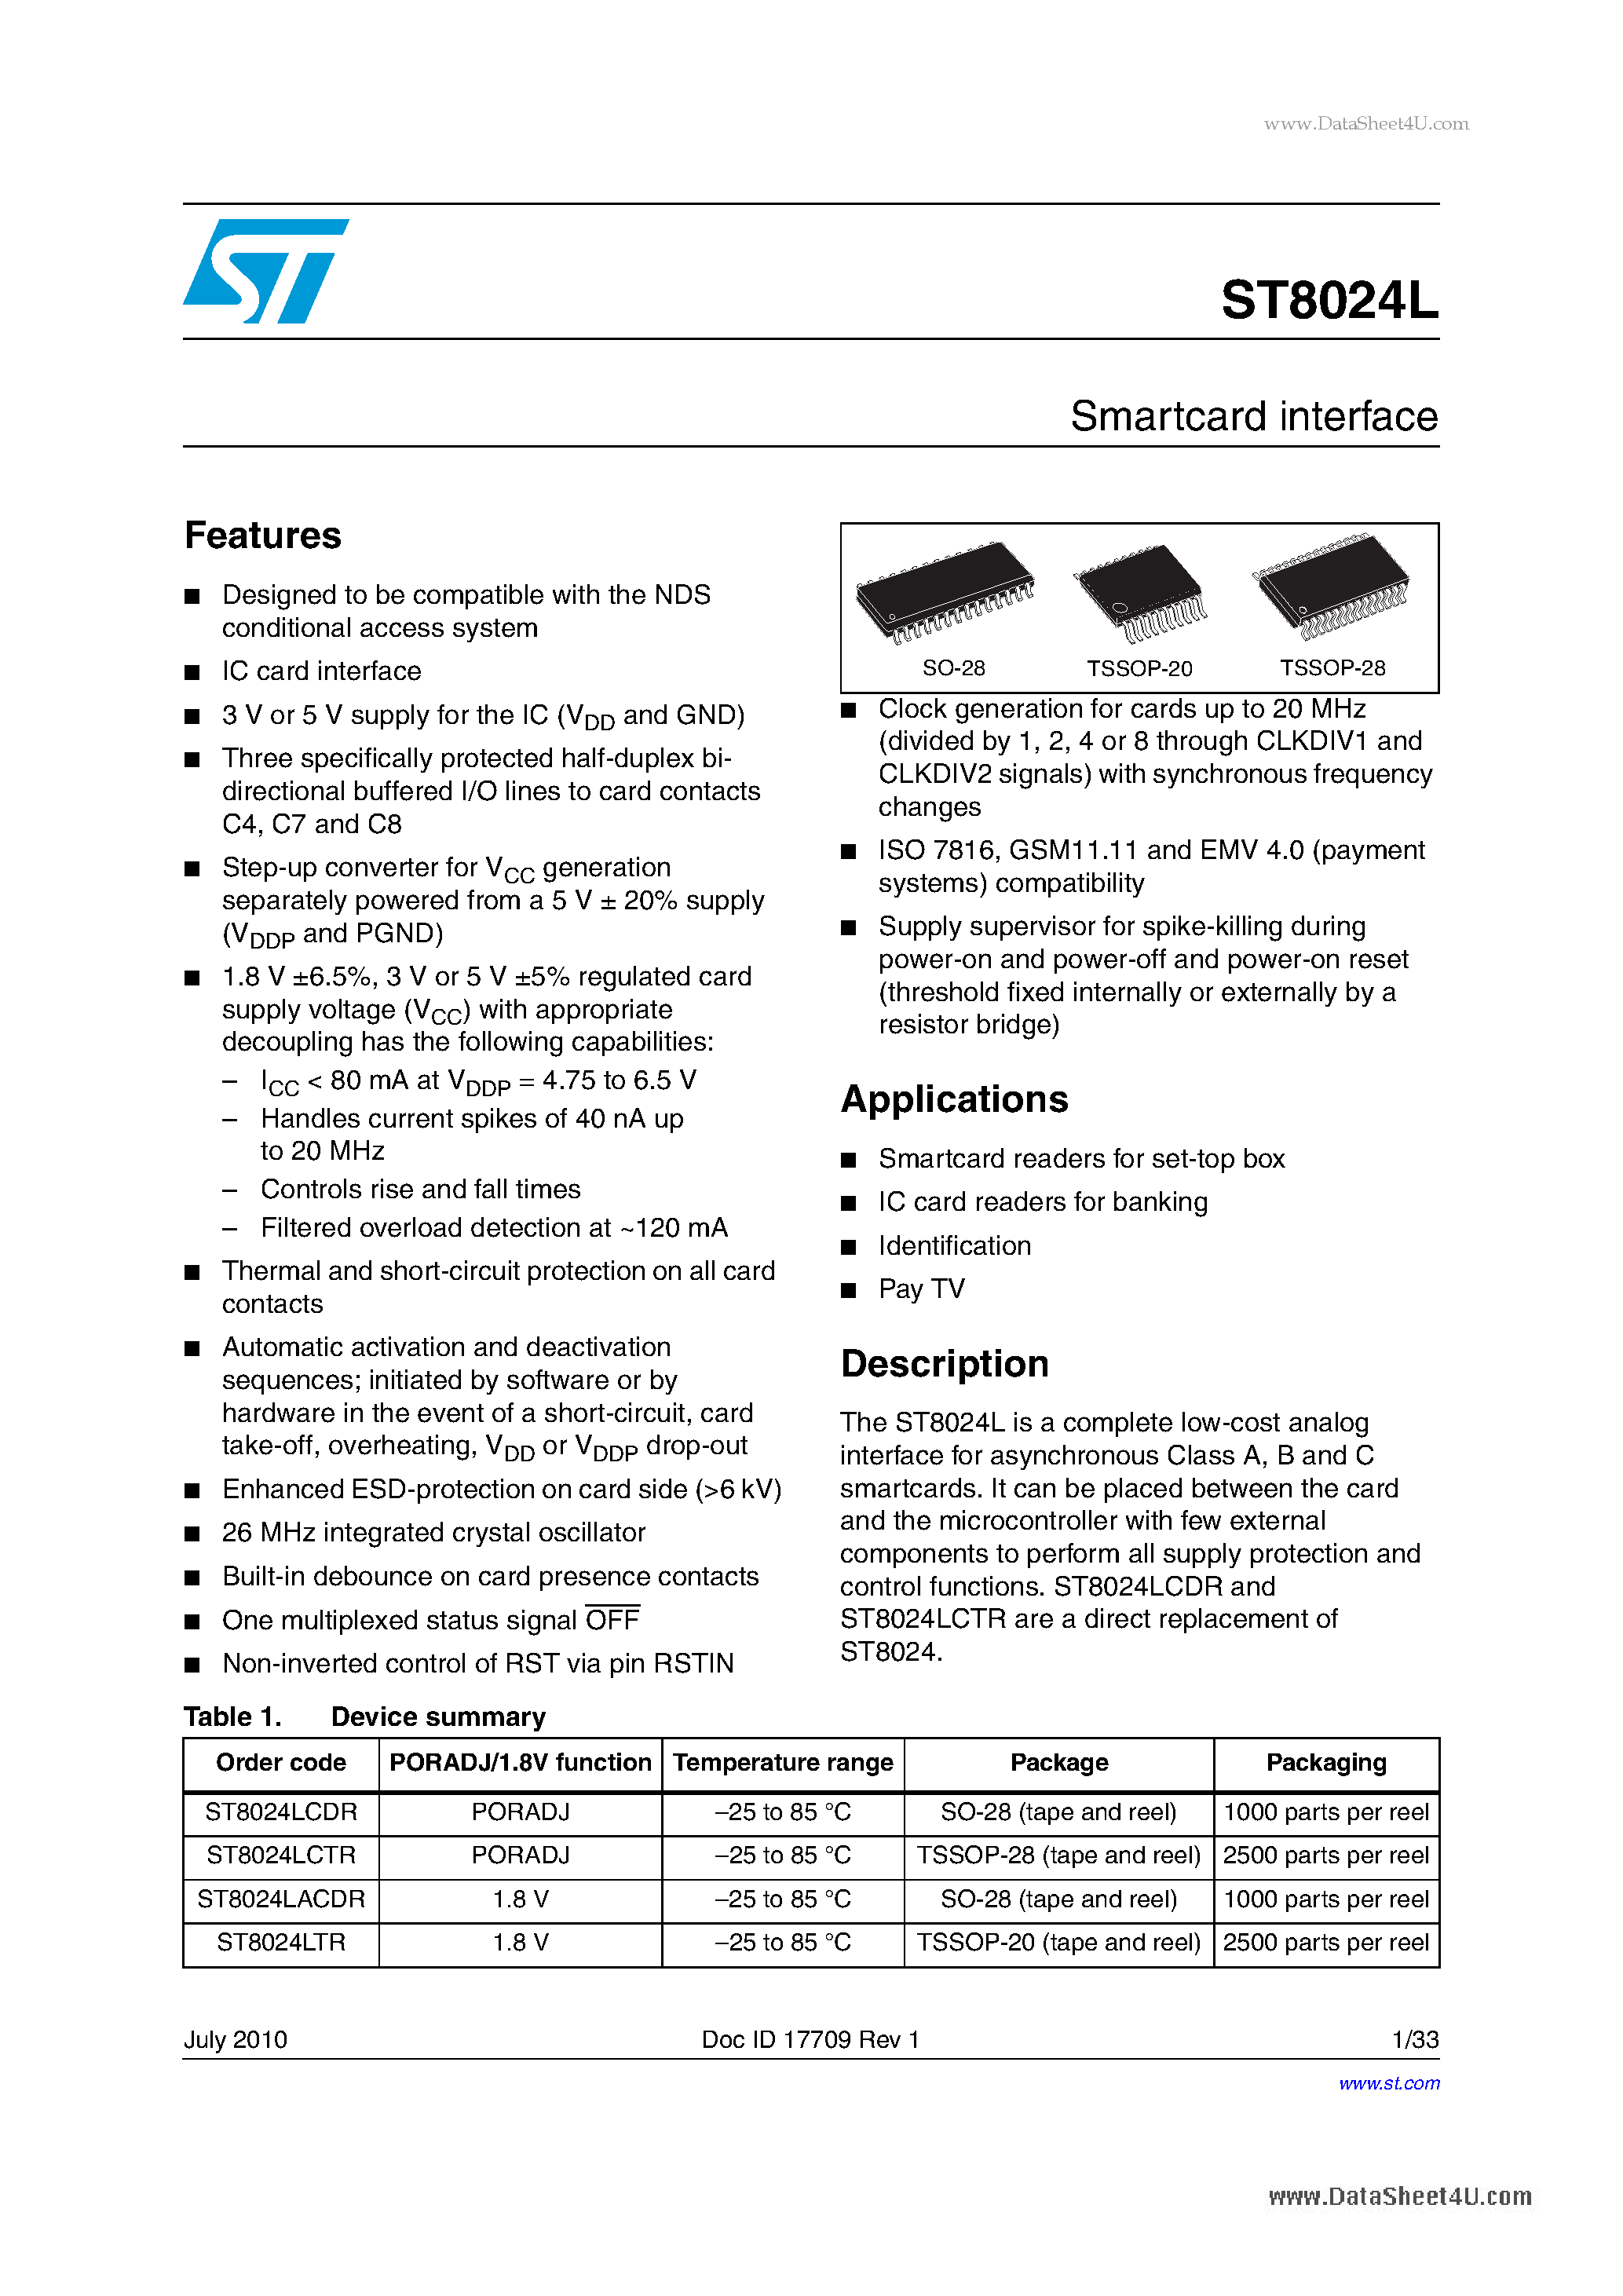 Даташит ST8024L - Smartcard interface страница 1